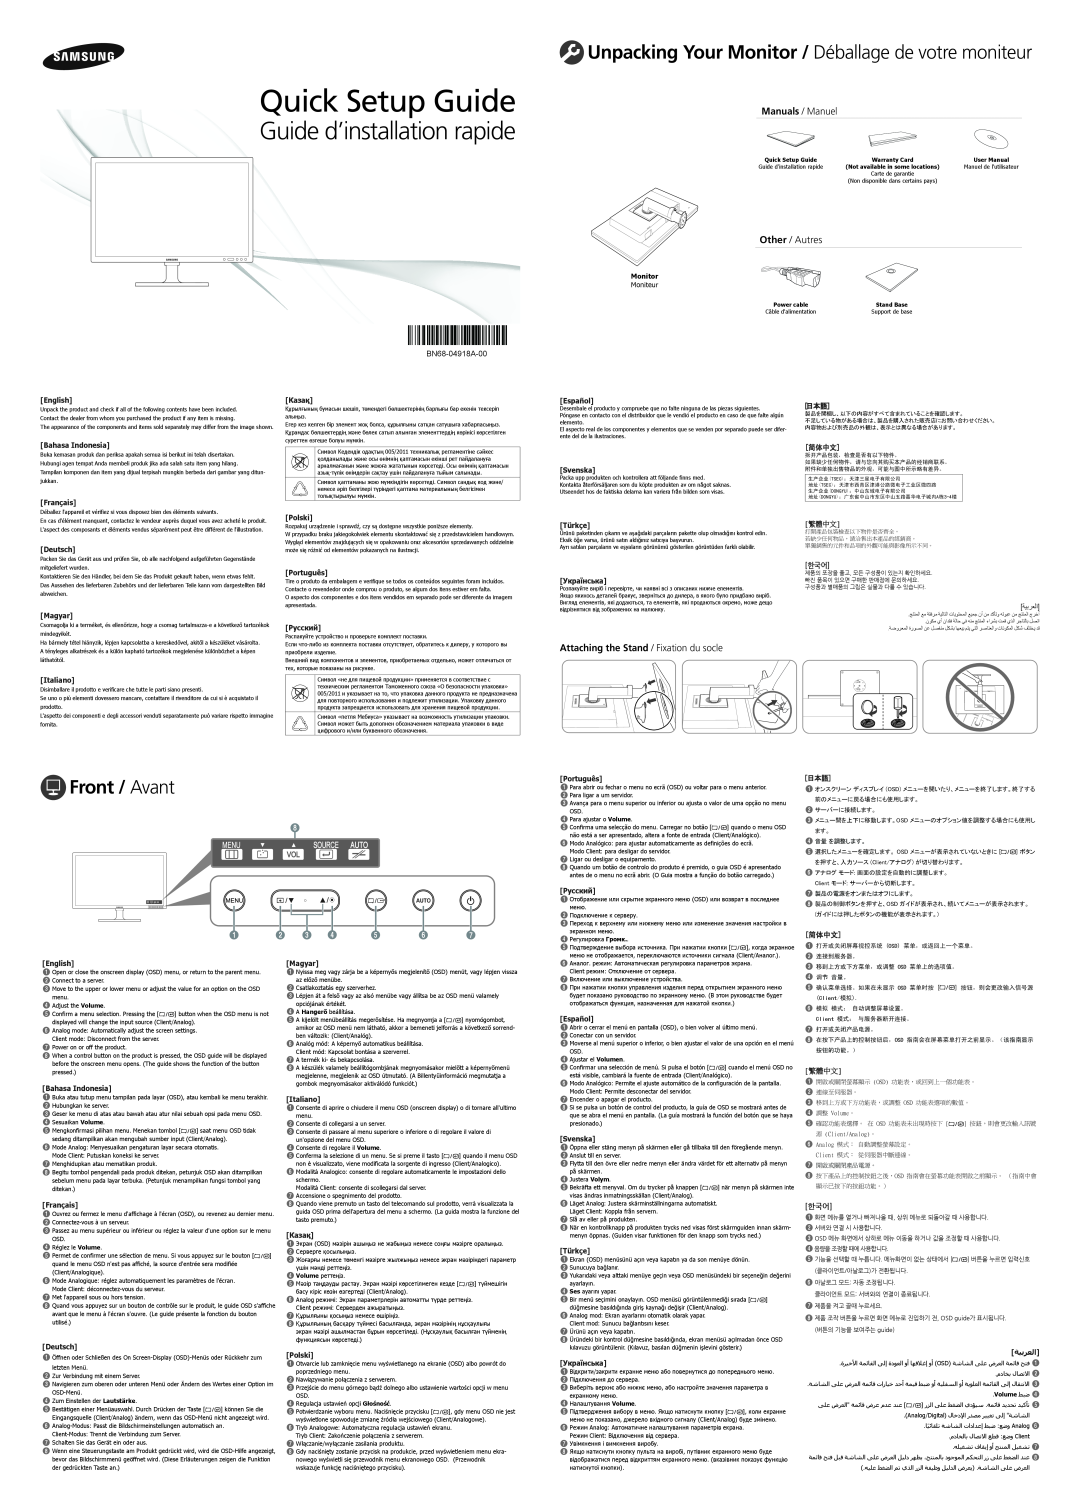 Samsung LF22NTBHBNM/EN manual Front / Avant, Quick Setup Guide, Guide d’installation rapide, Manuals / Manuel, Source Auto 